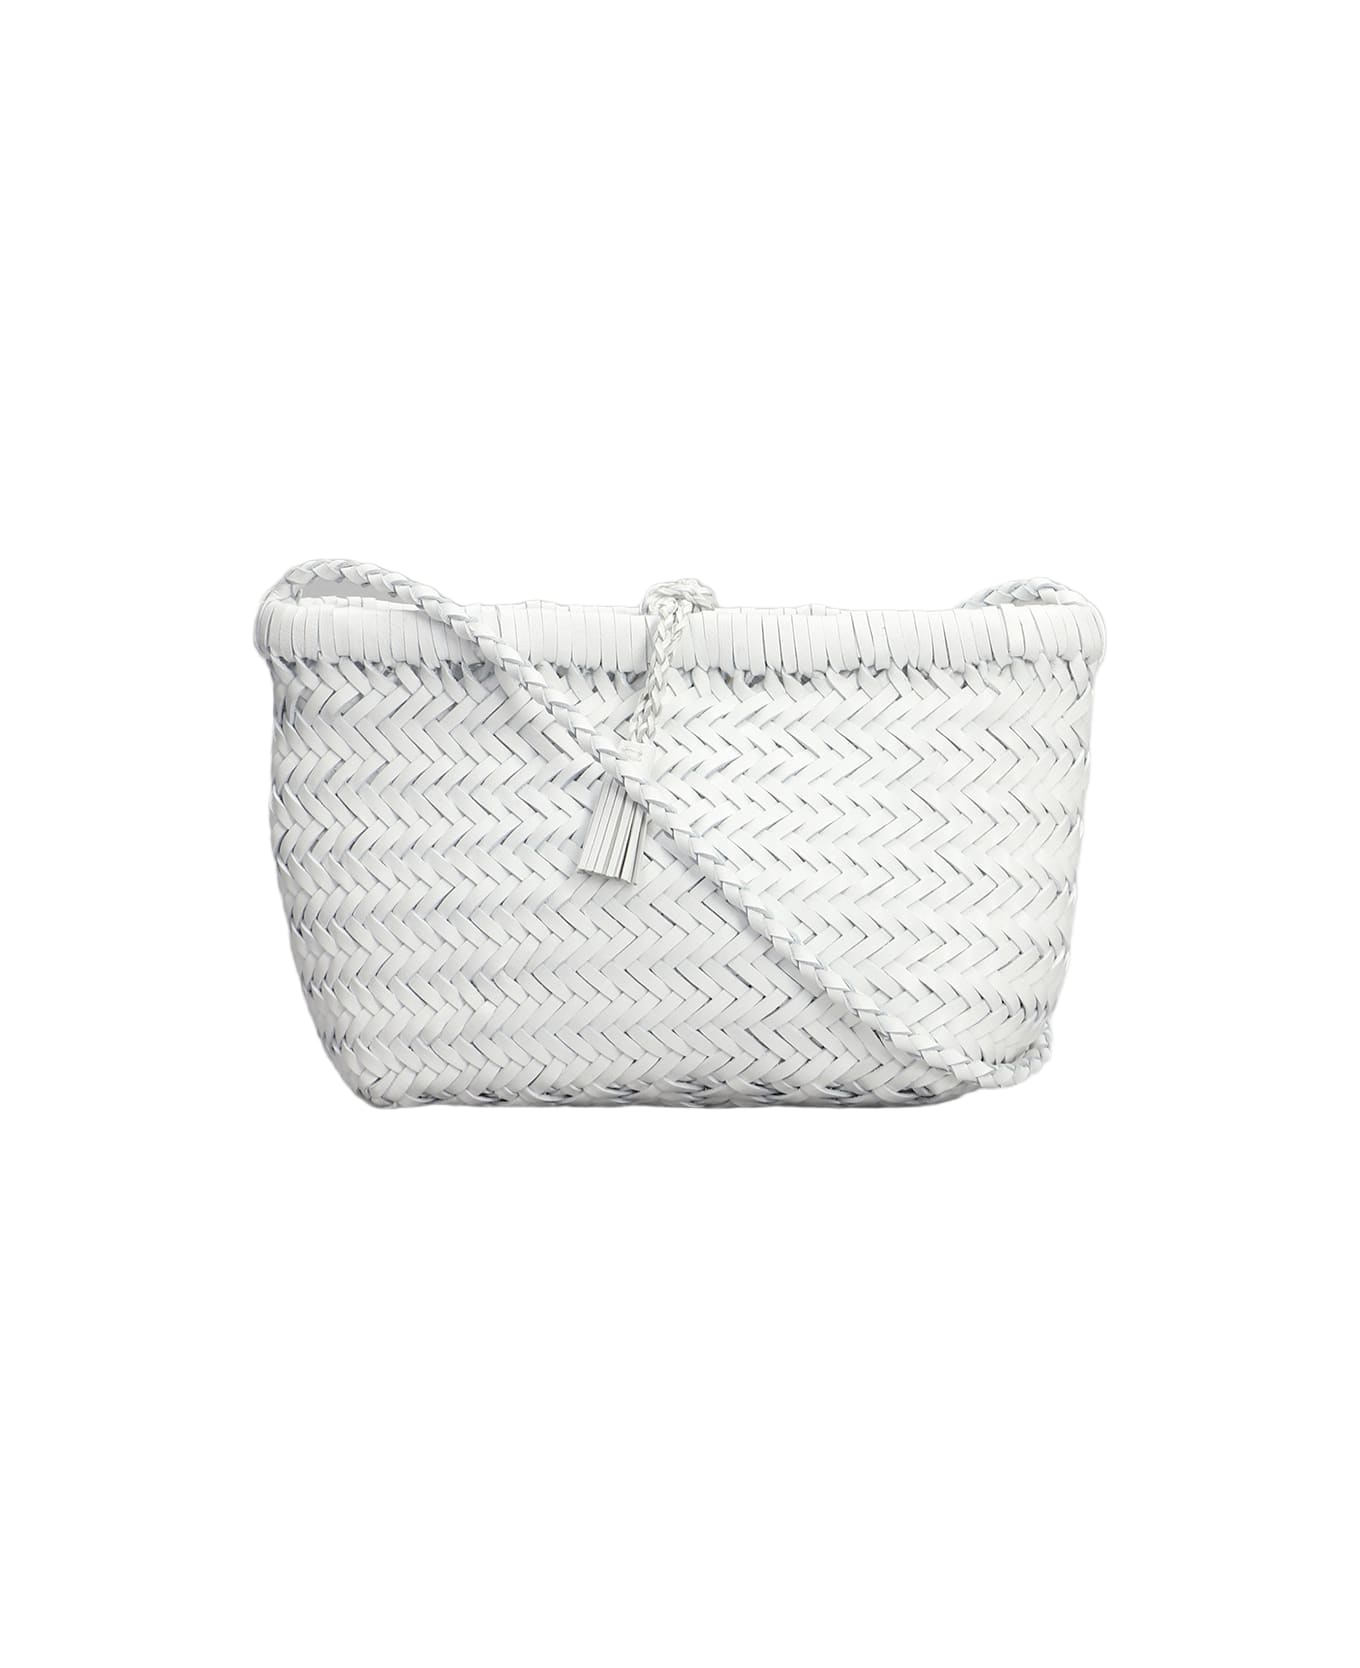 Dragon Diffusion Minsu Shoulder Bag In White Leather - white